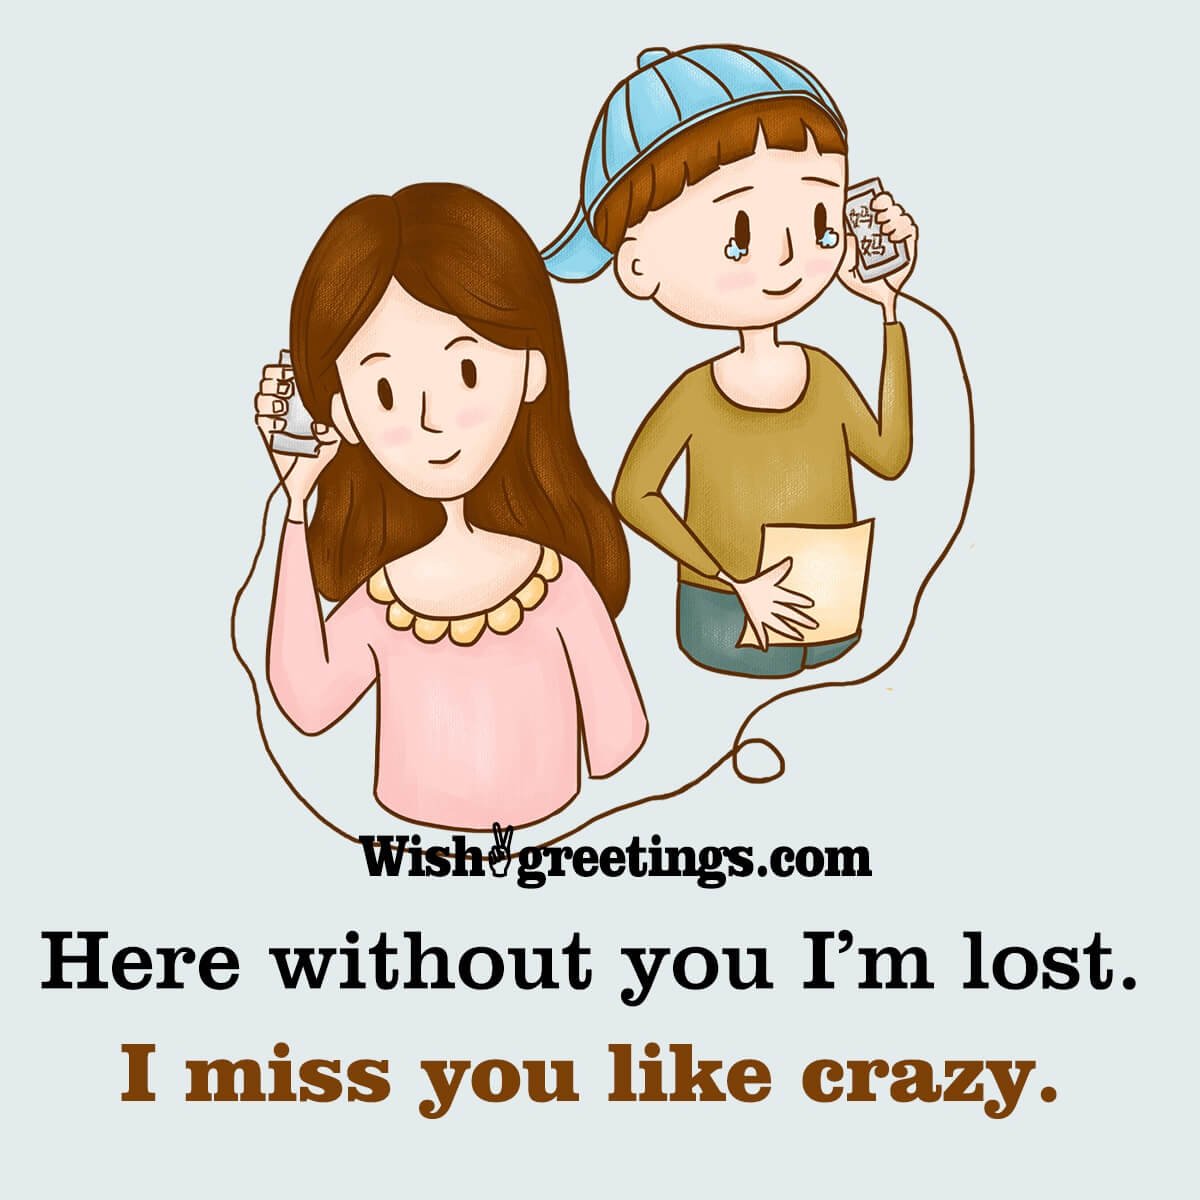 I Miss You Like Crazy